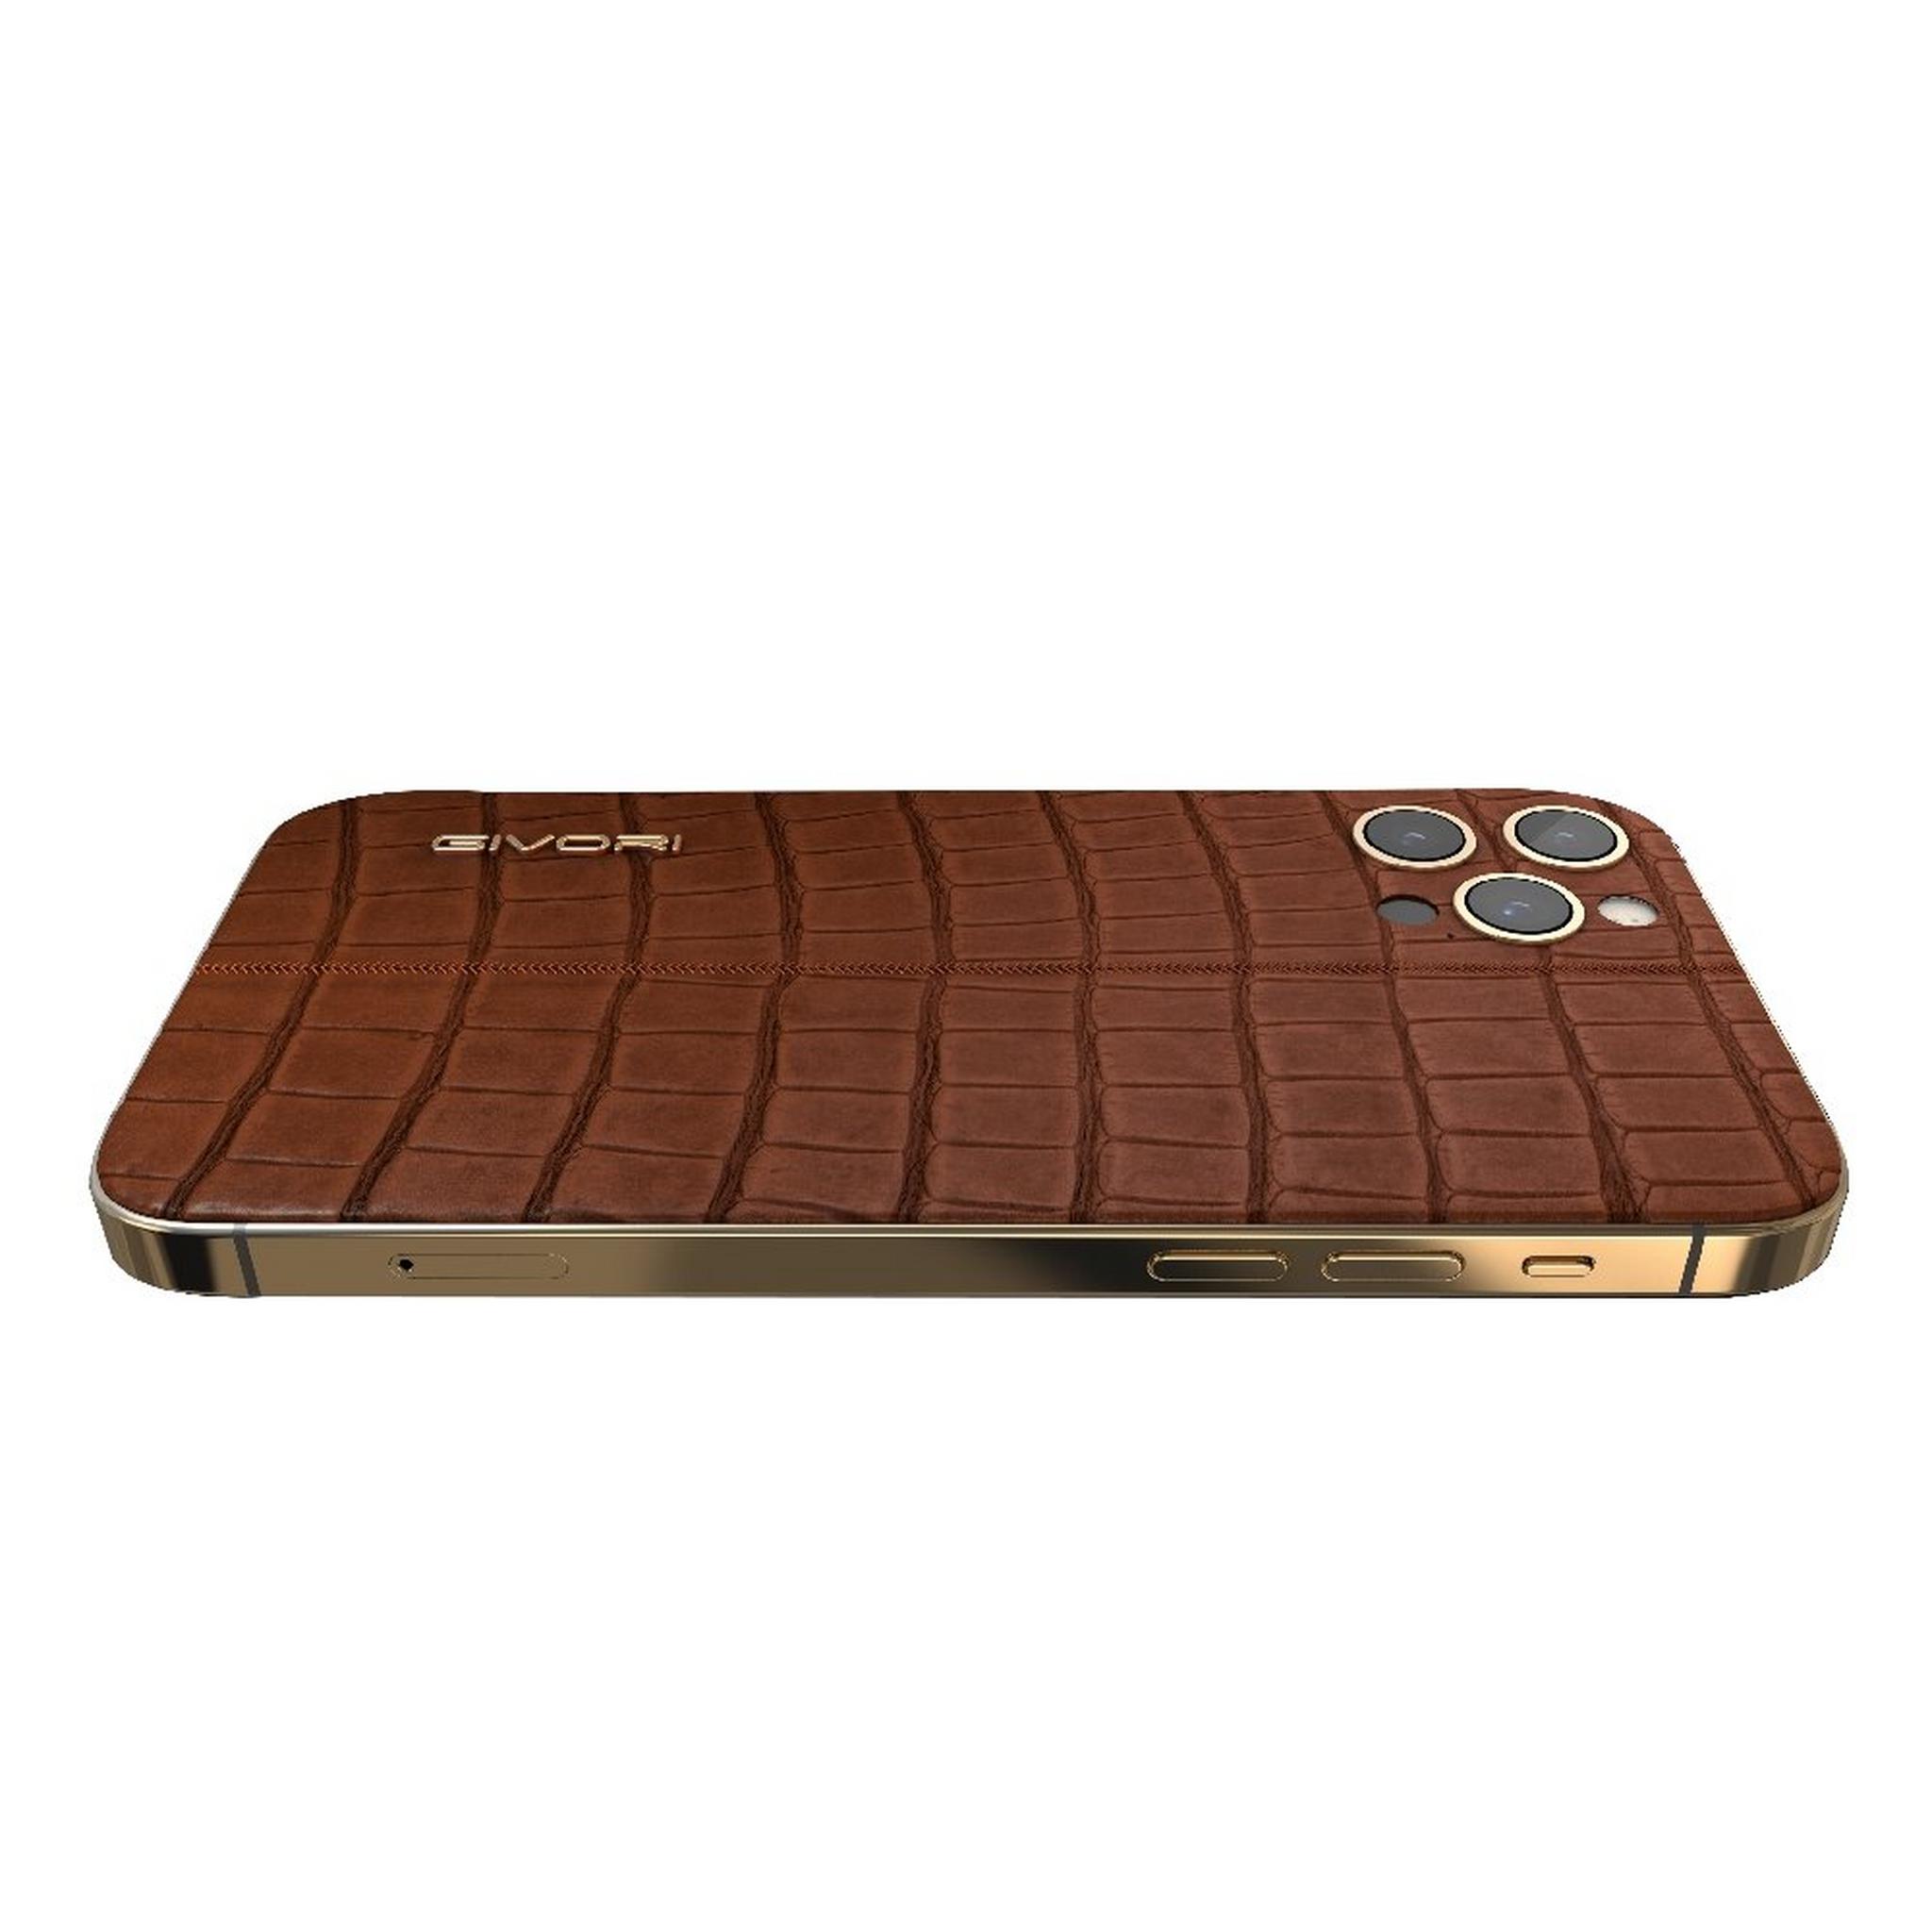 Givori iPhone 13 Pro Max 512GB - Alligator Cigar